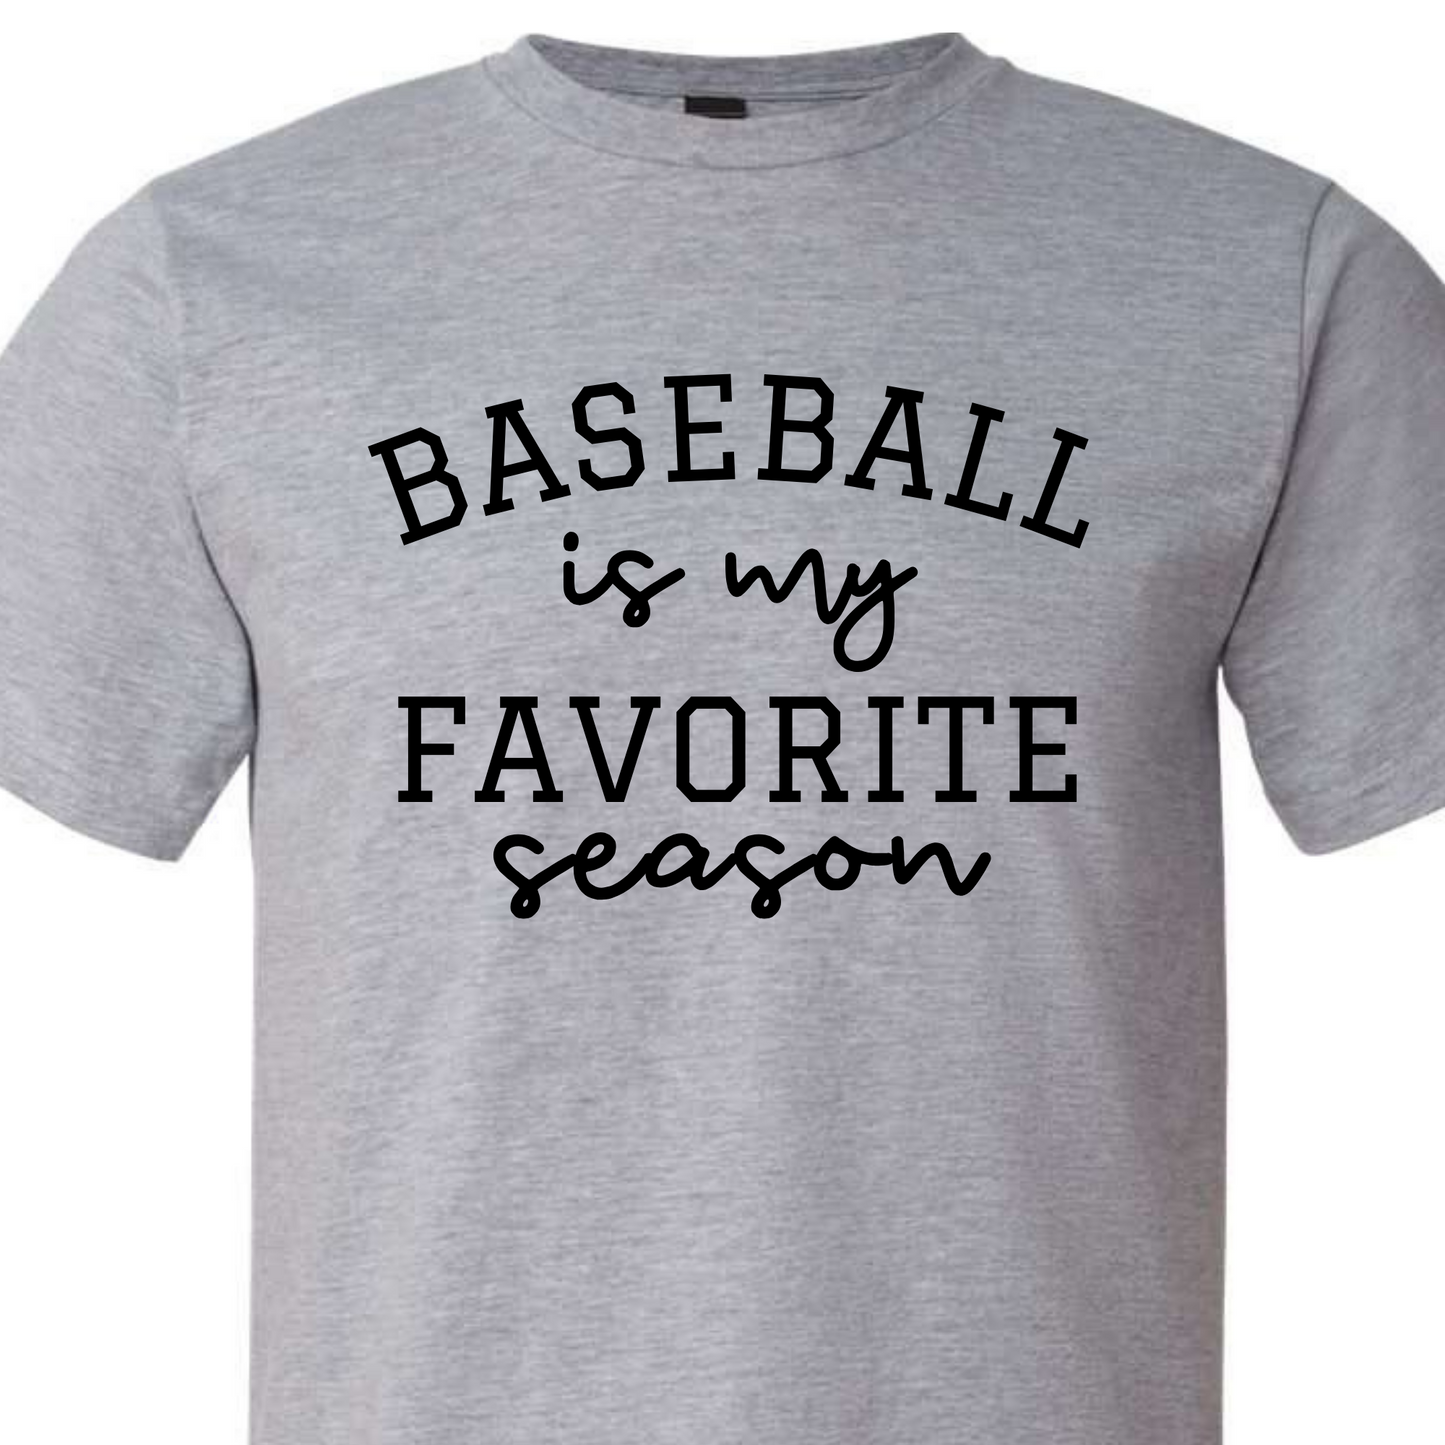 Favorite Season T-Shirt (Baseball)